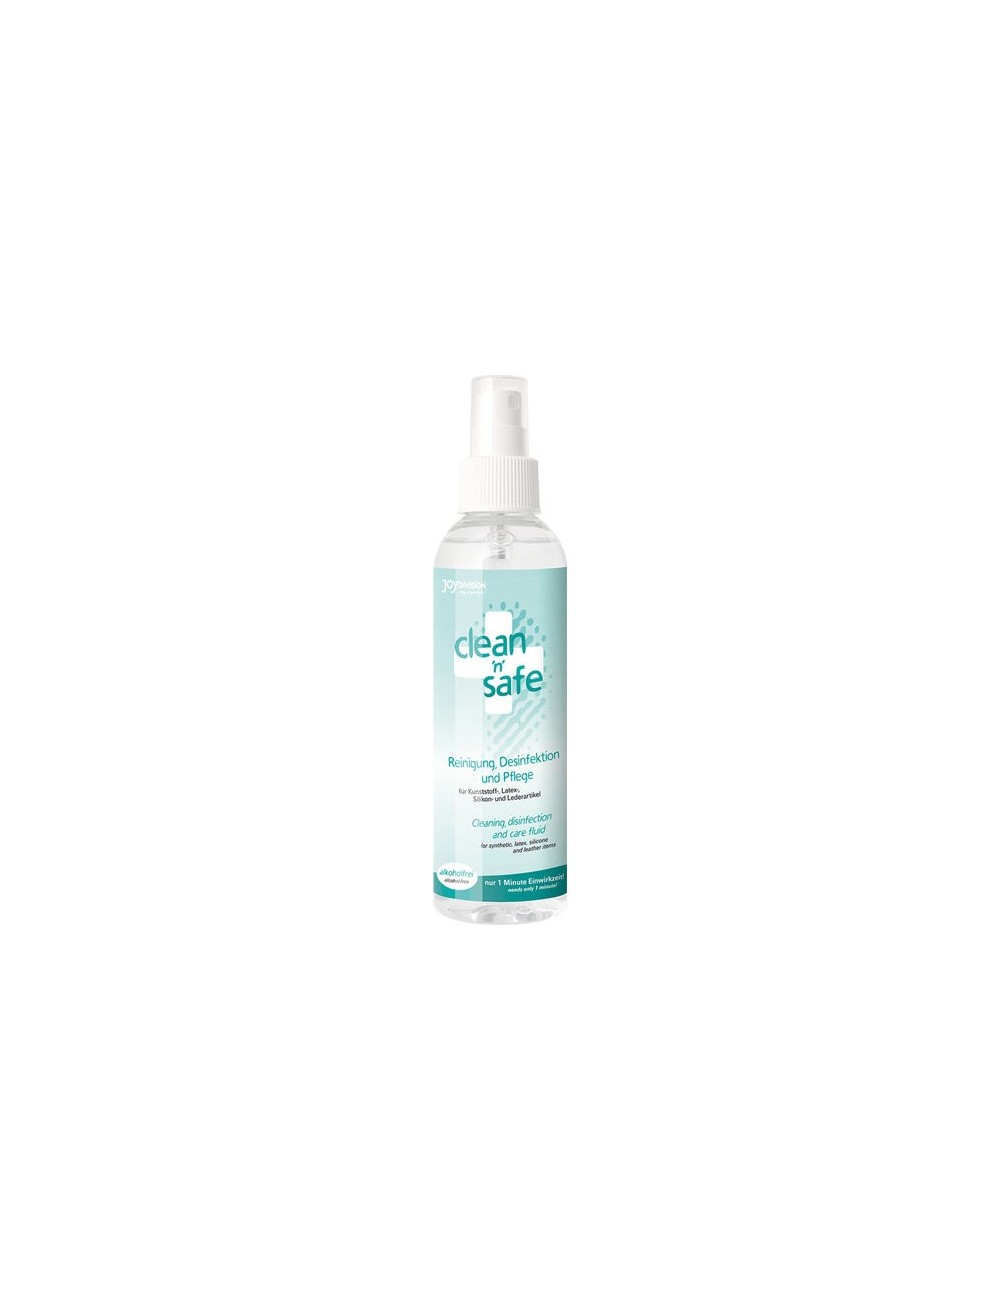 Clean n safe 200 ml - Hygiène - JOYDIVISION CLEAN SAFE